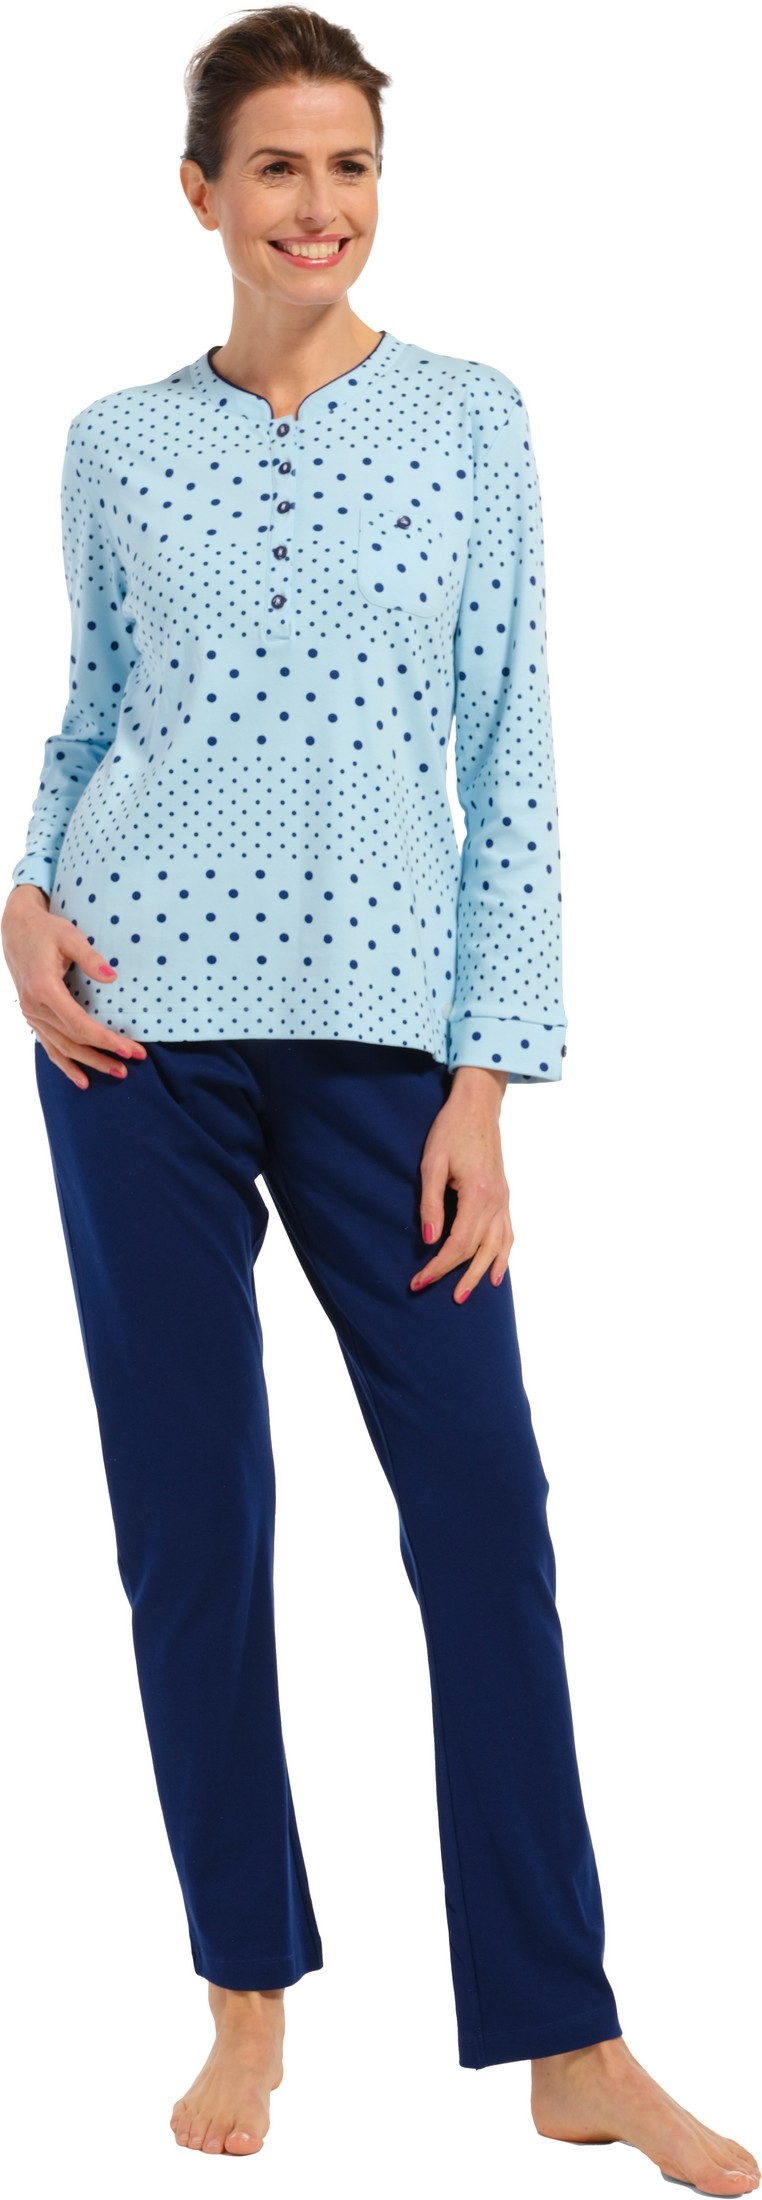 Pastunette dames pyjama 20232-162-4 - Blauw - 38